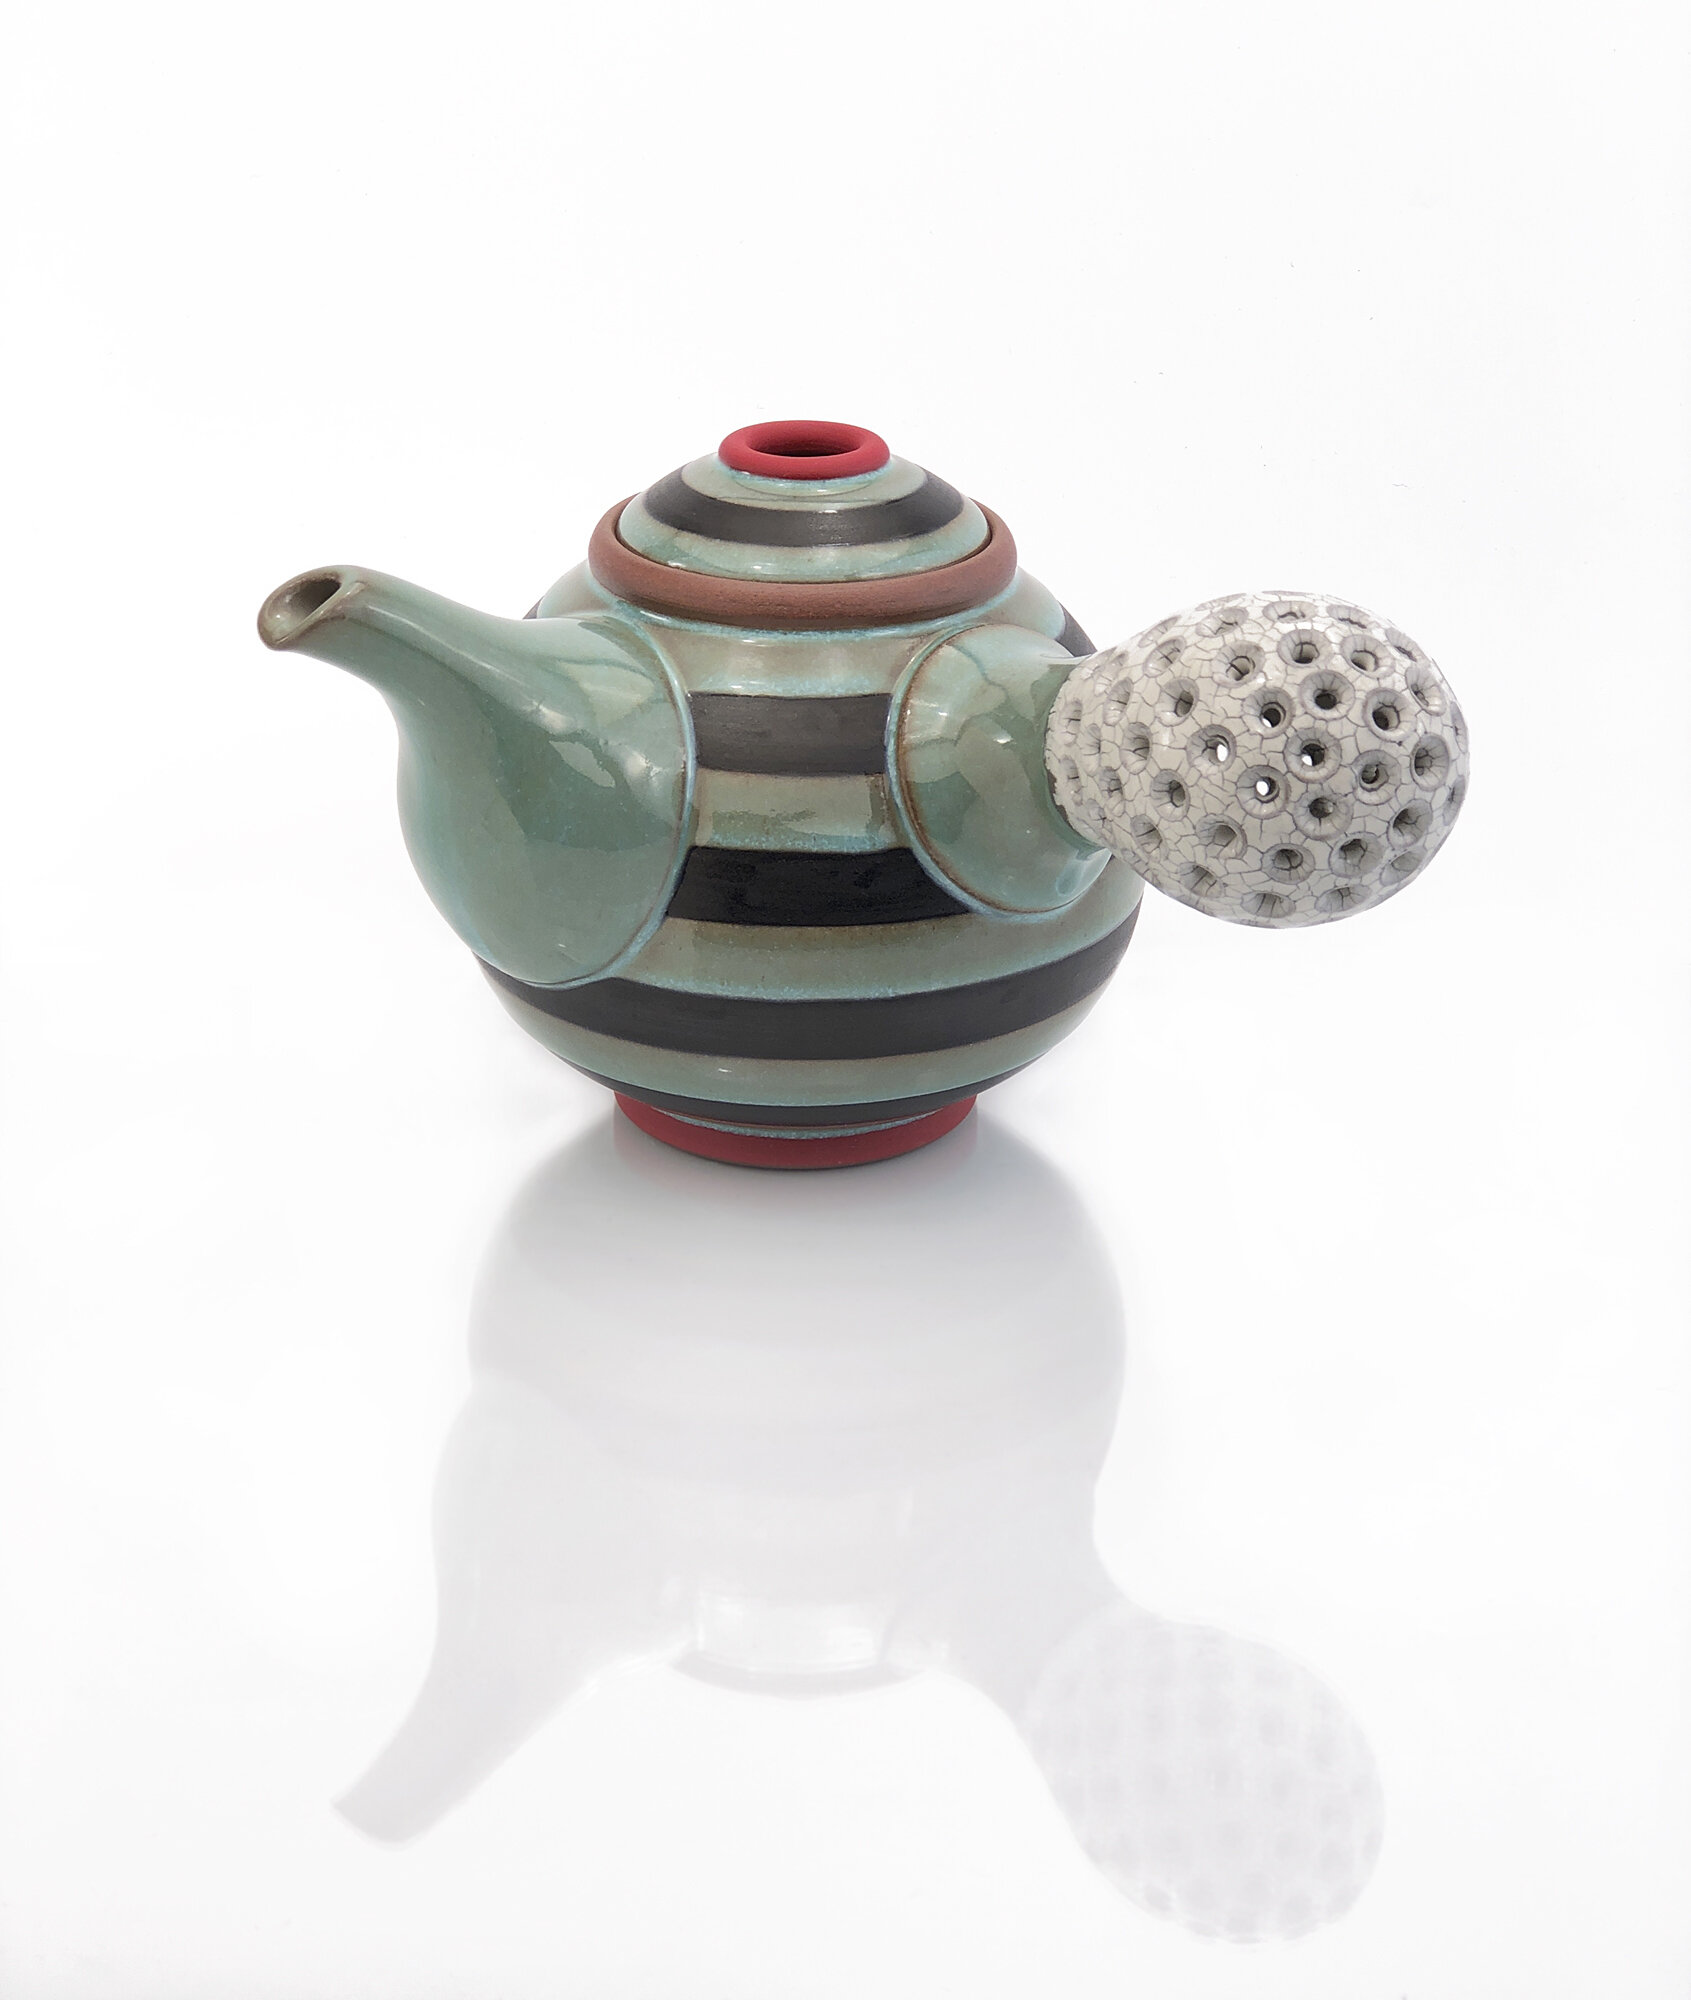 Striped side handle teapot